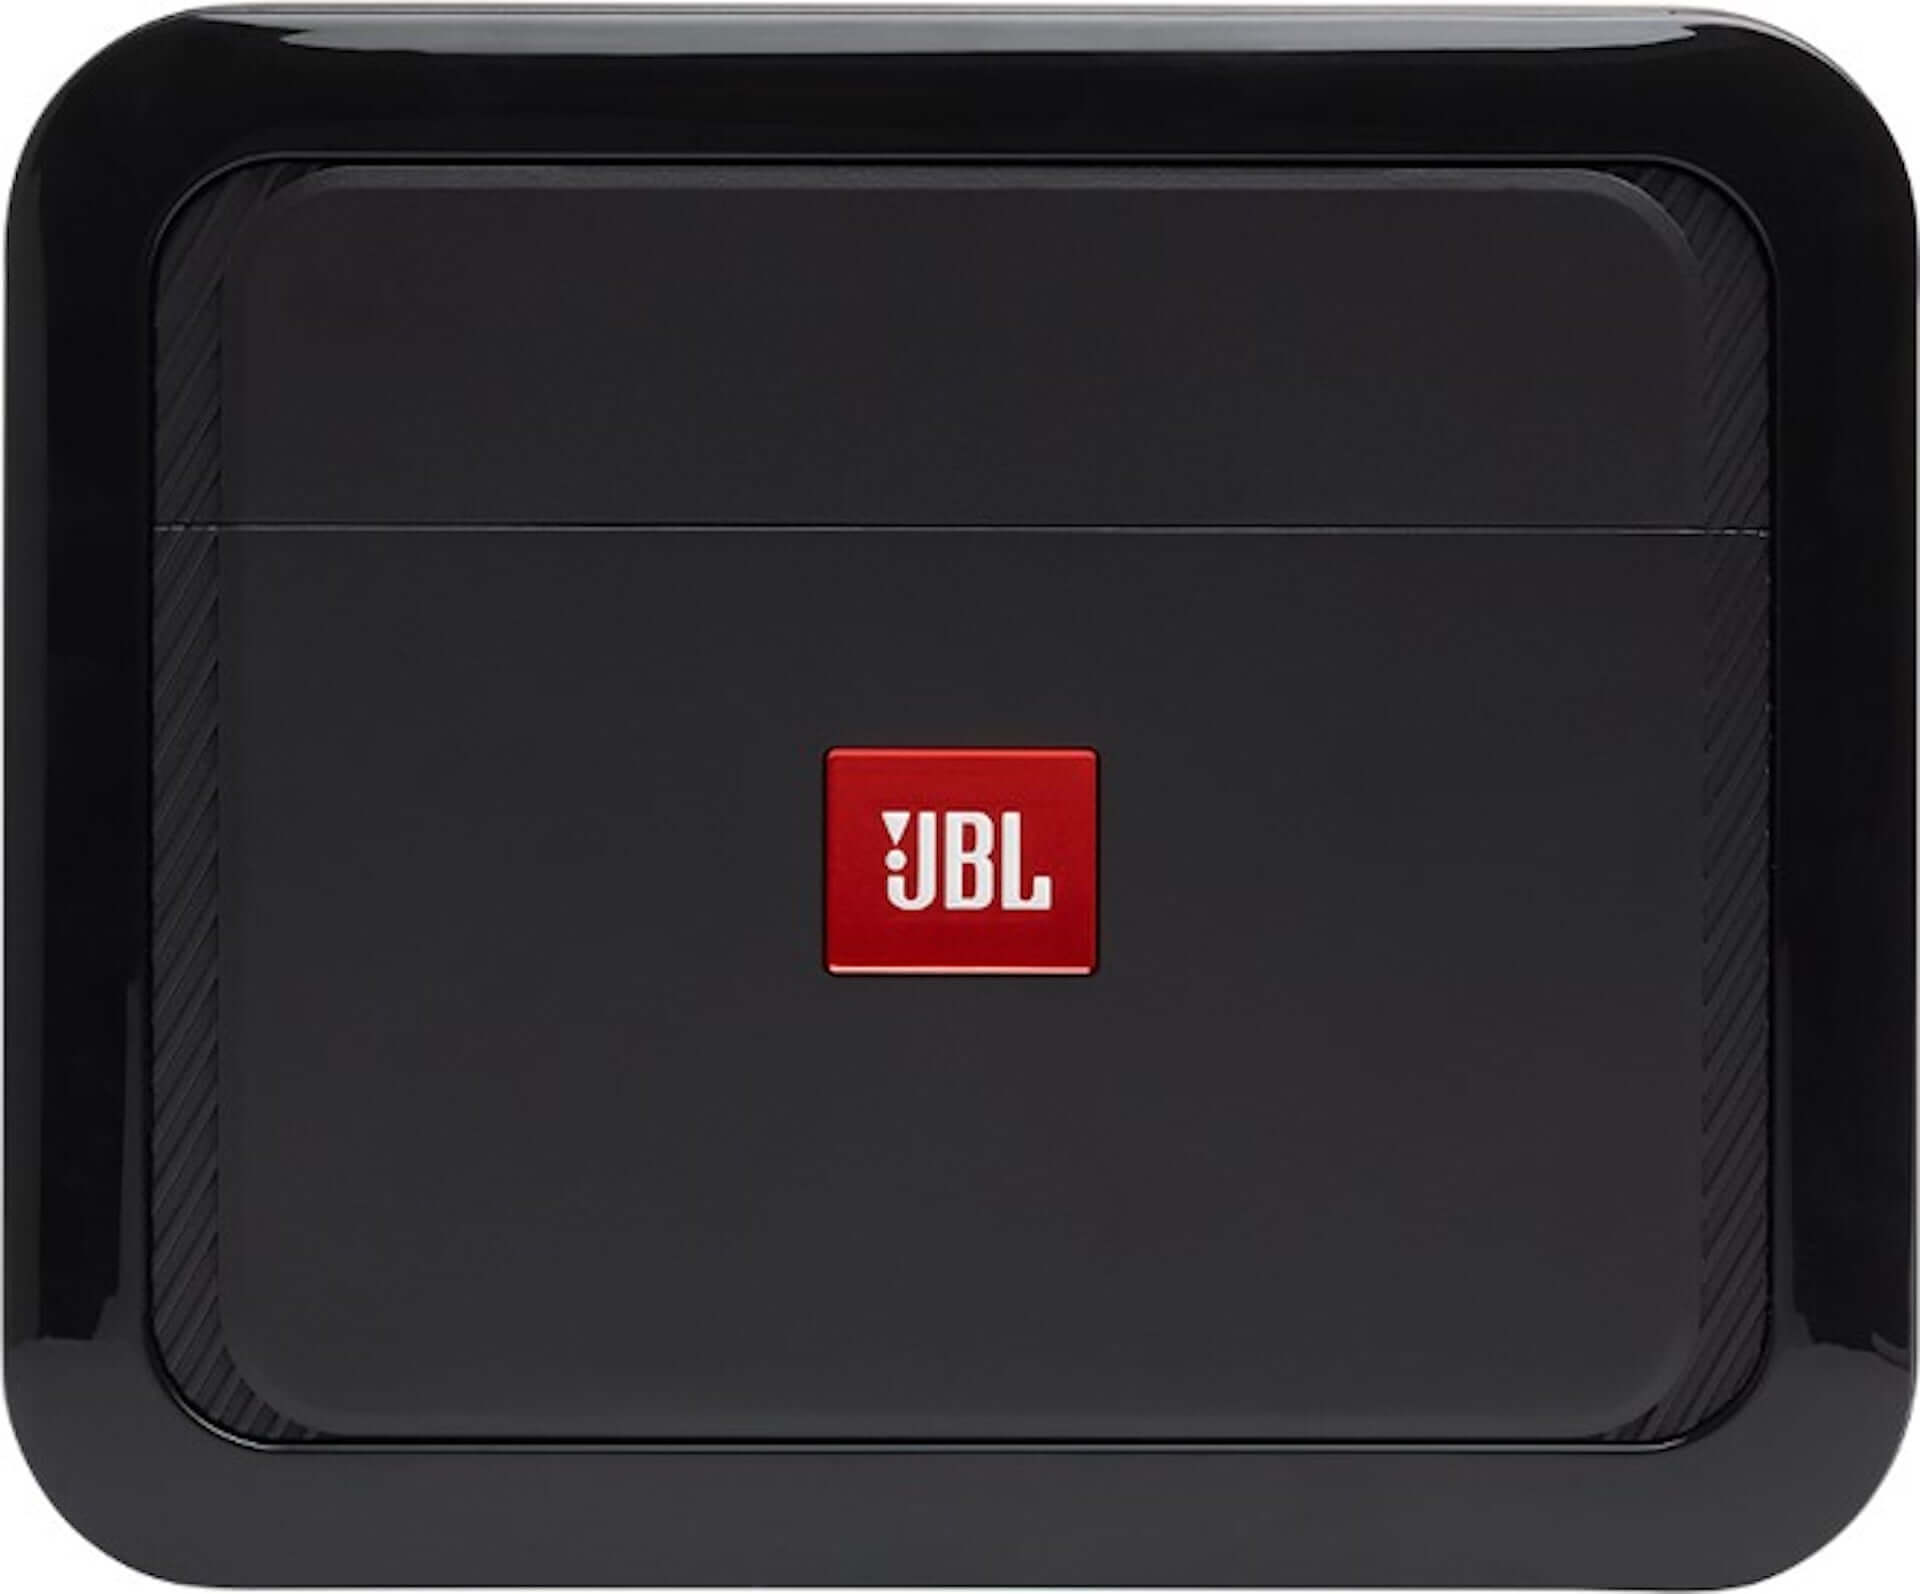 JBLのモバイルアンプでカーオーディオを手軽にアップグレード！「CLUB」シリーズから新モデルが発売決定 tech200327_jbl_club_4-1920x1594